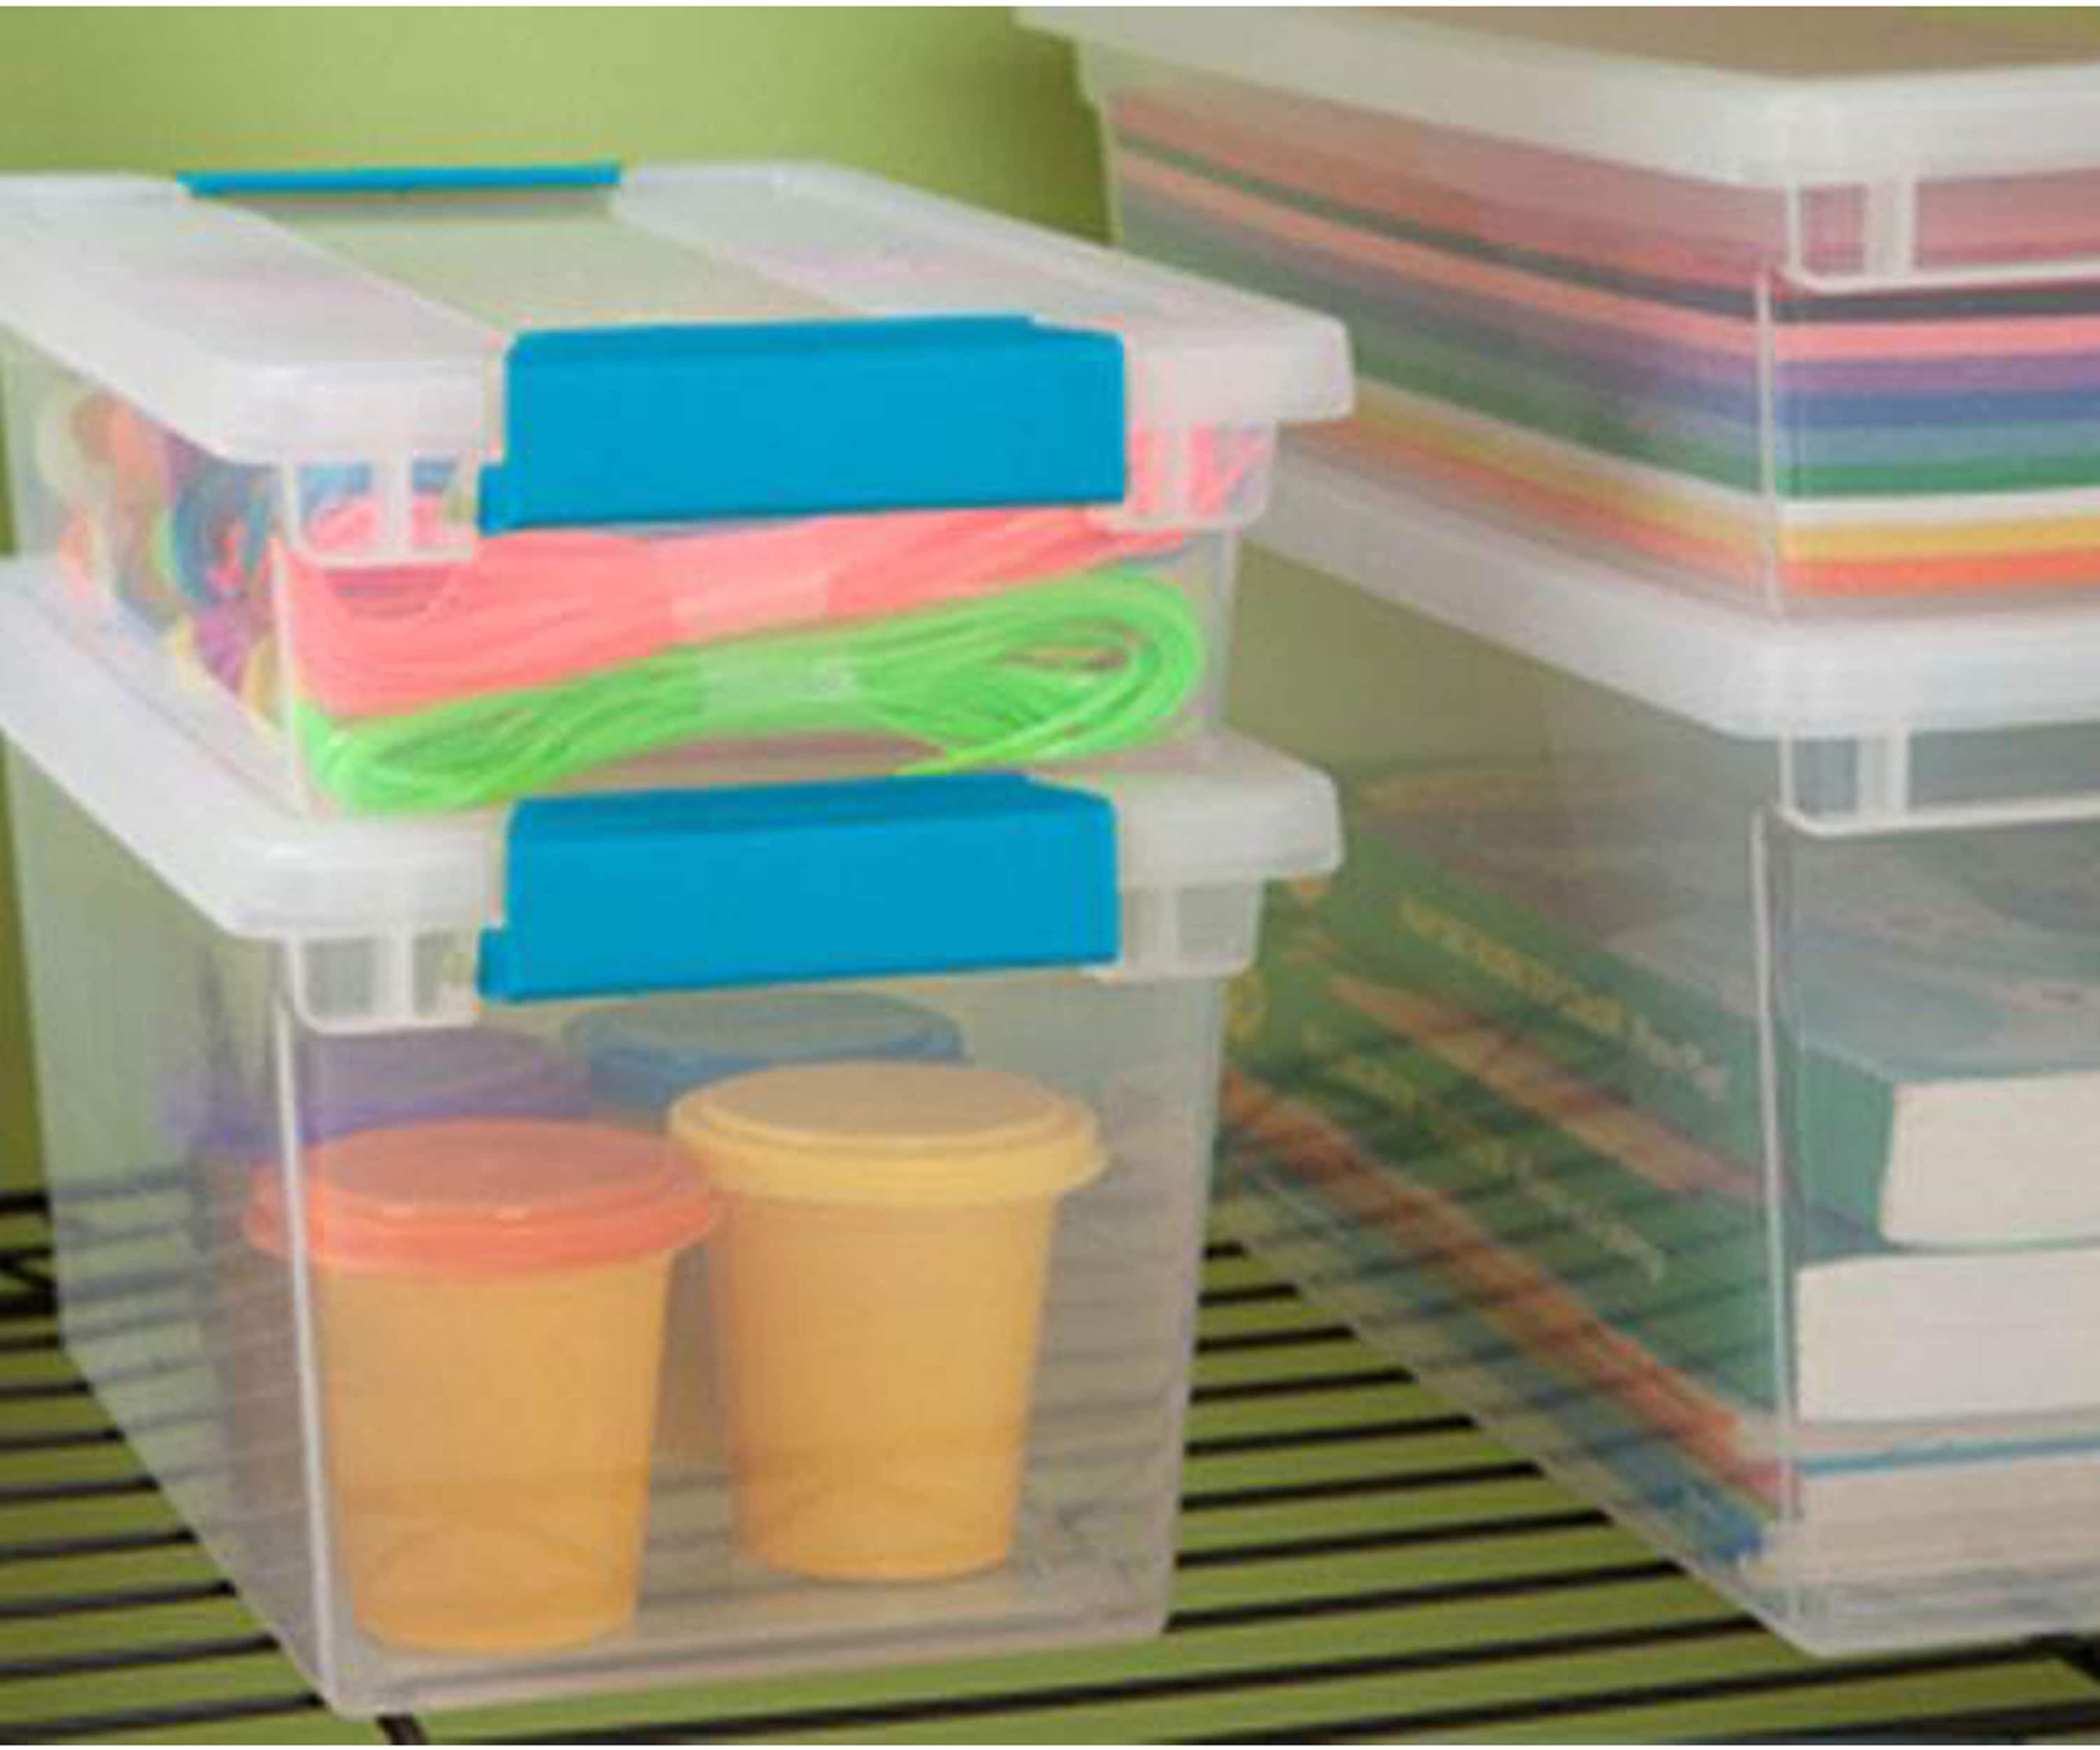 Sterilite Plastic Medium Clip Storage Box Container with Latching